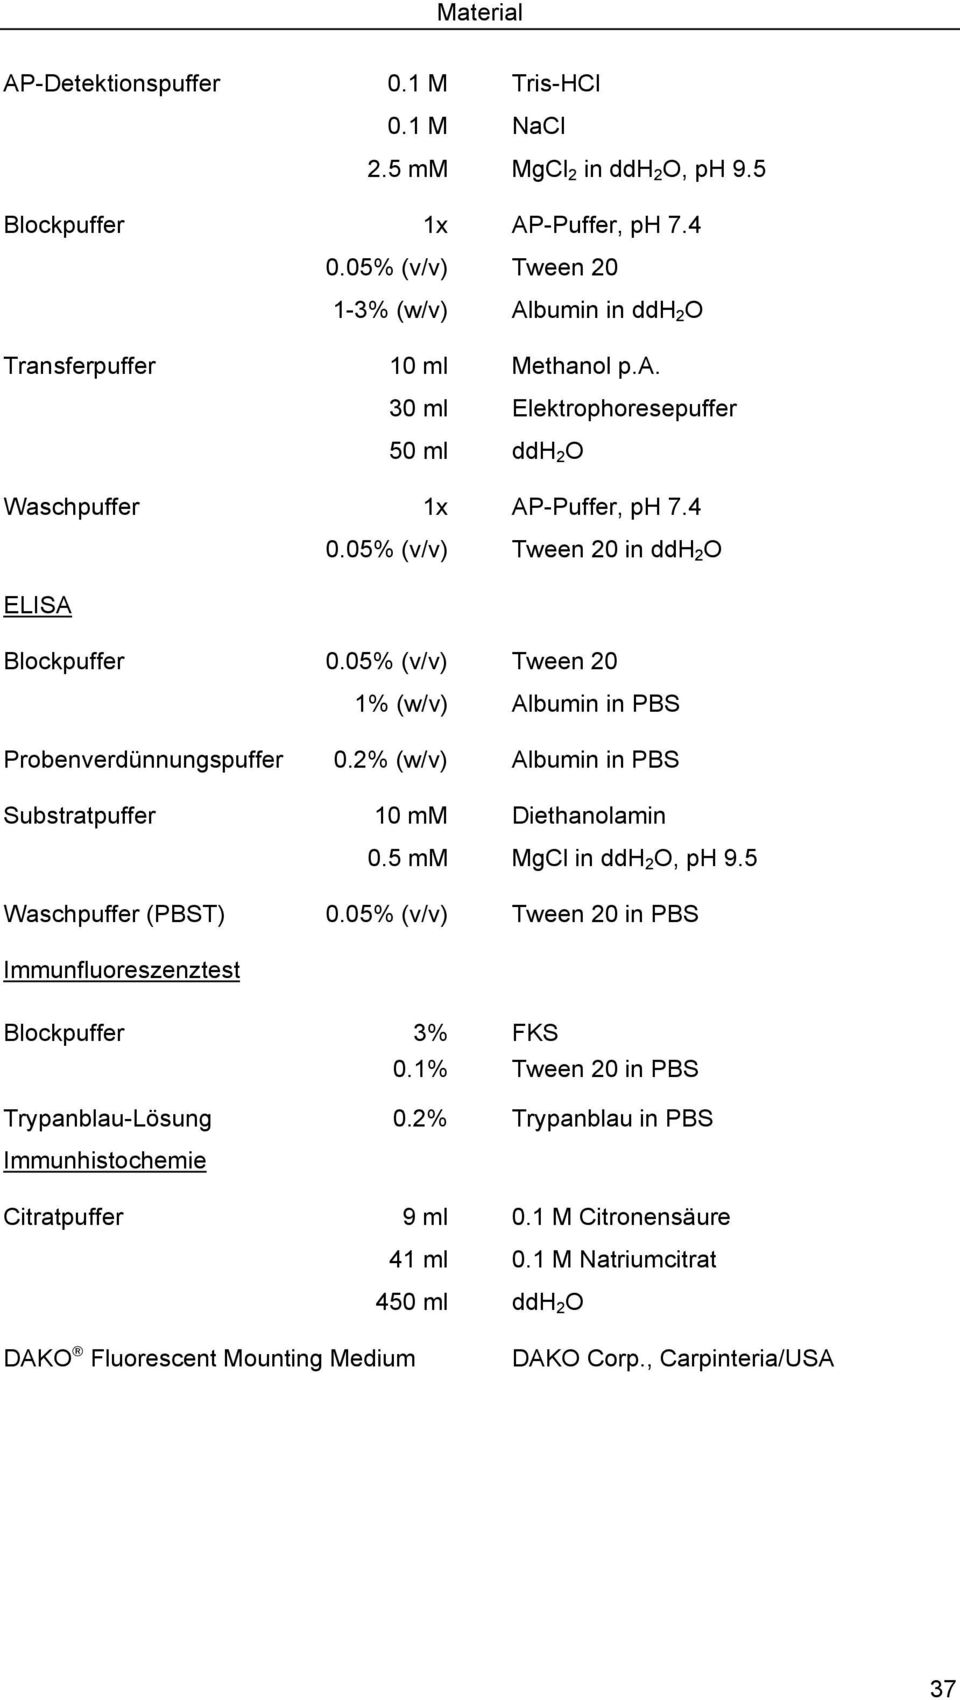 5 mm MgCl in ddh 2 O, ph 9.5 Waschpuffer (PBST) 0.05% (v/v) Tween 20 in PBS Immunfluoreszenztest Blockpuffer 3% FKS 0.1% Tween 20 in PBS Trypanblau-Lösung 0.